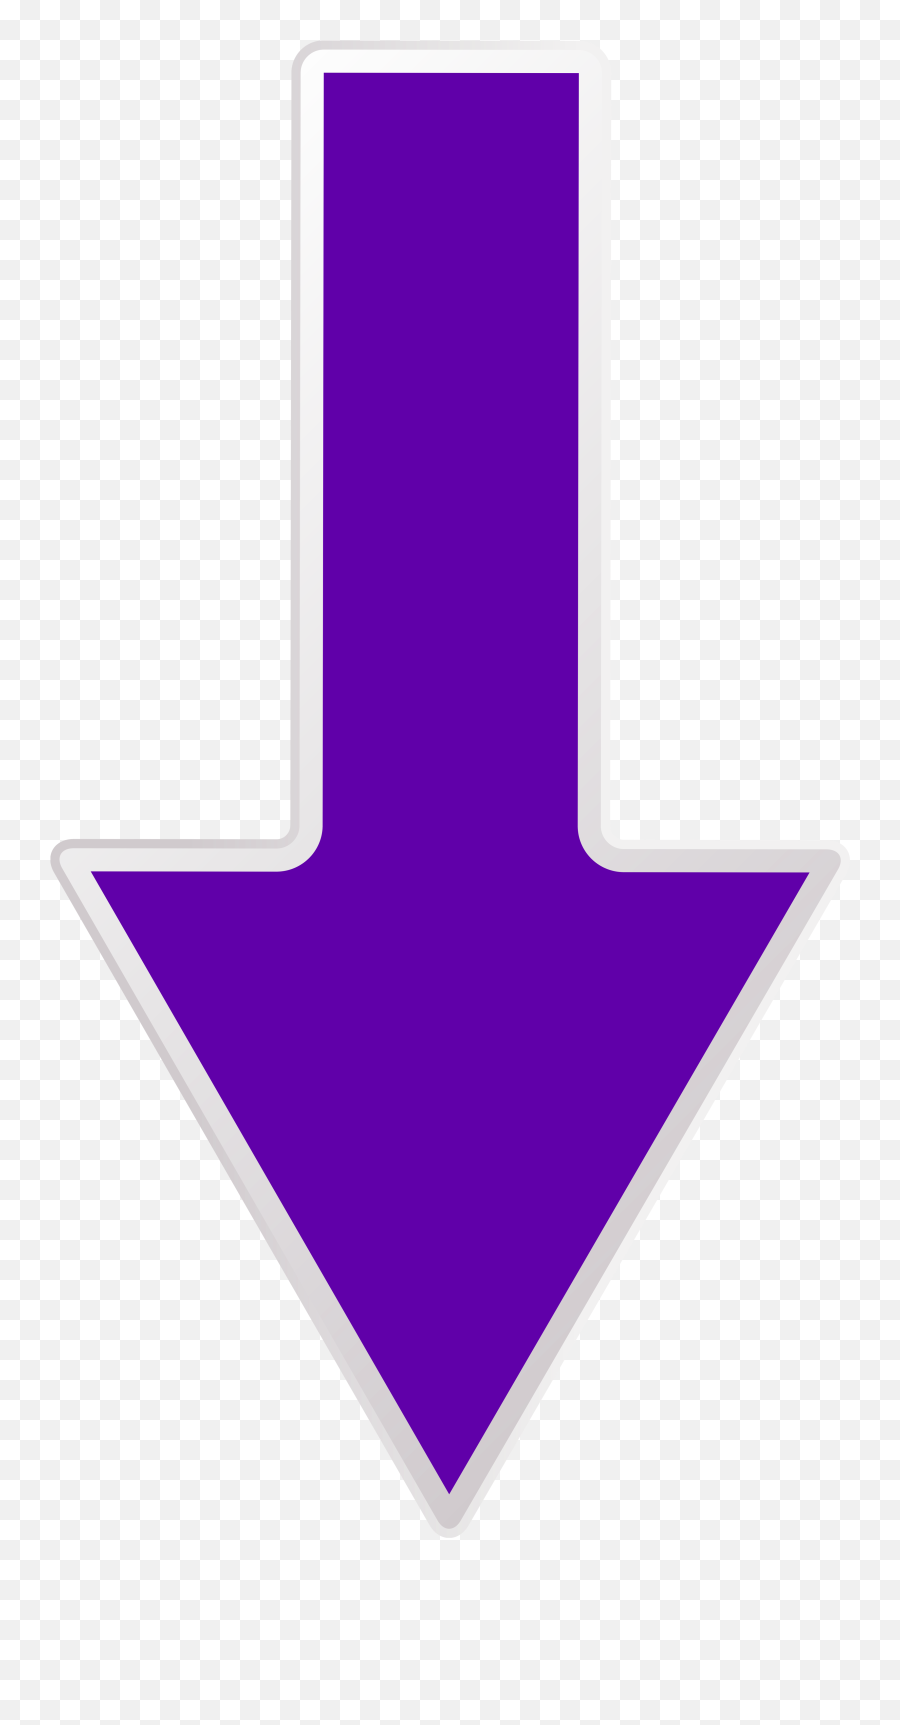 Free Arrow Image Transparent Download Free Arrow Image Emoji,Double Down Arrow Emoji